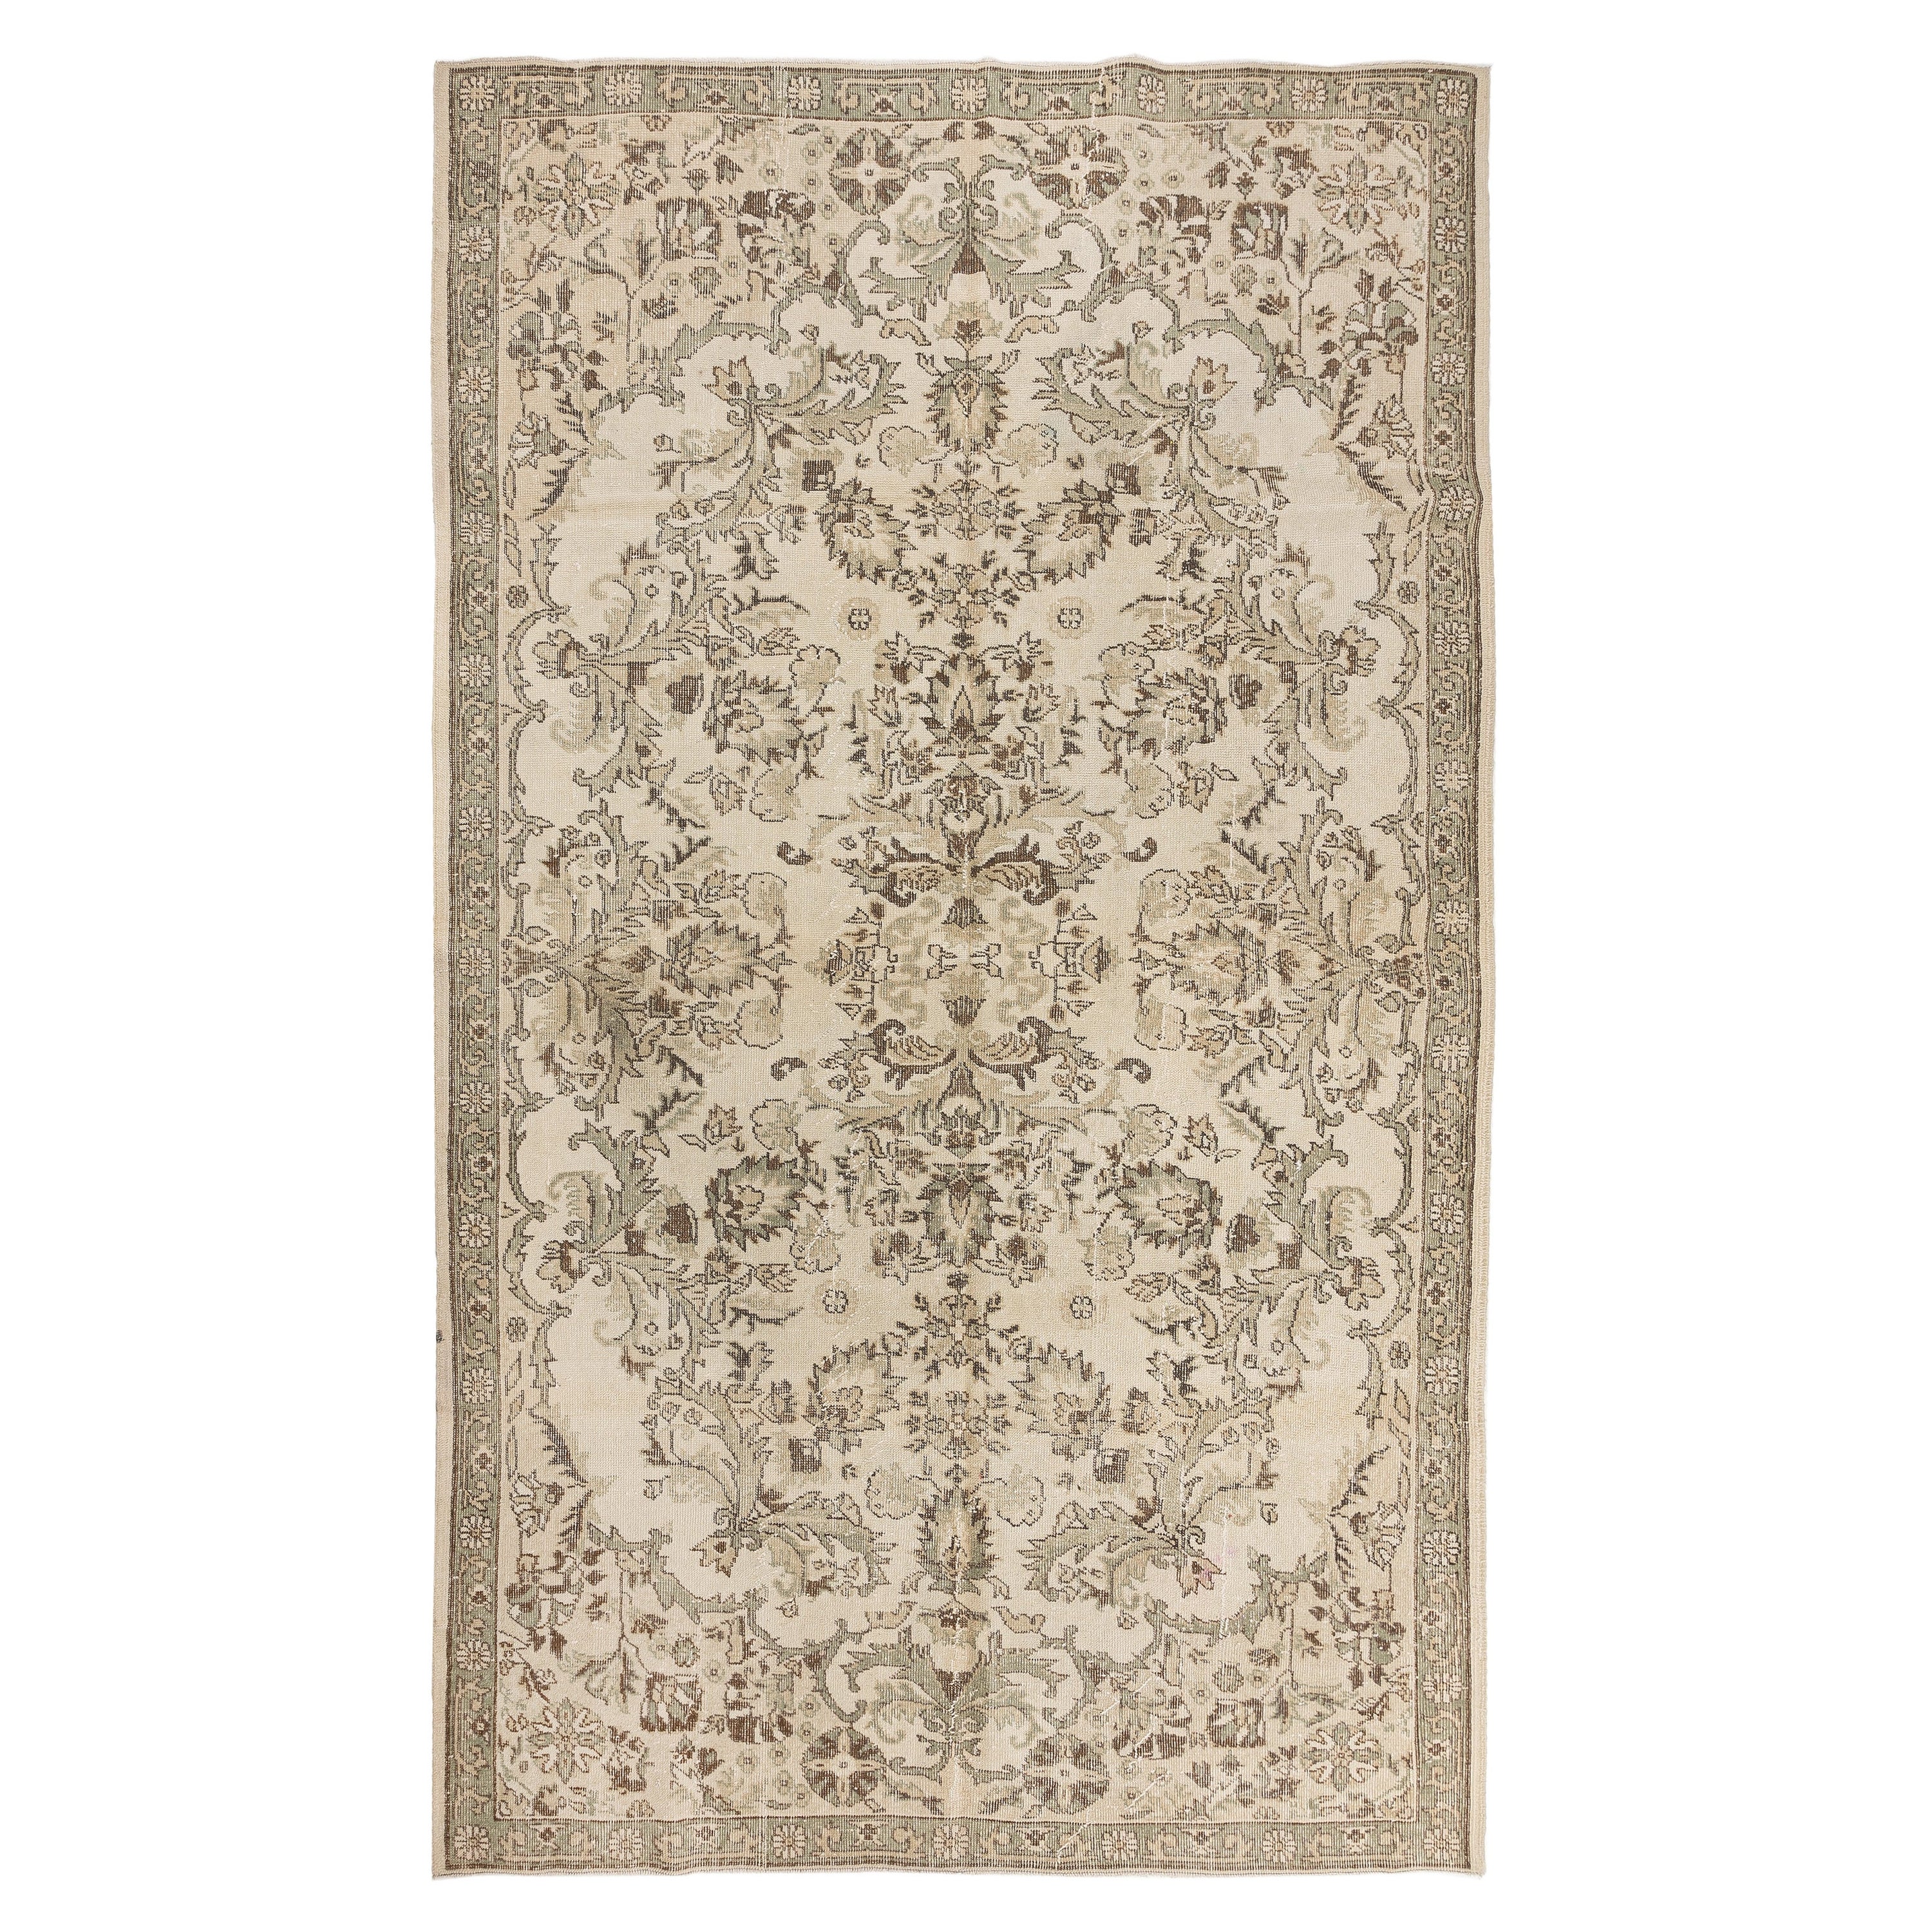 6.6x10 Ft Vintage Sun Faded Oushak Rug, Beige Handmade Anatolian Carpet